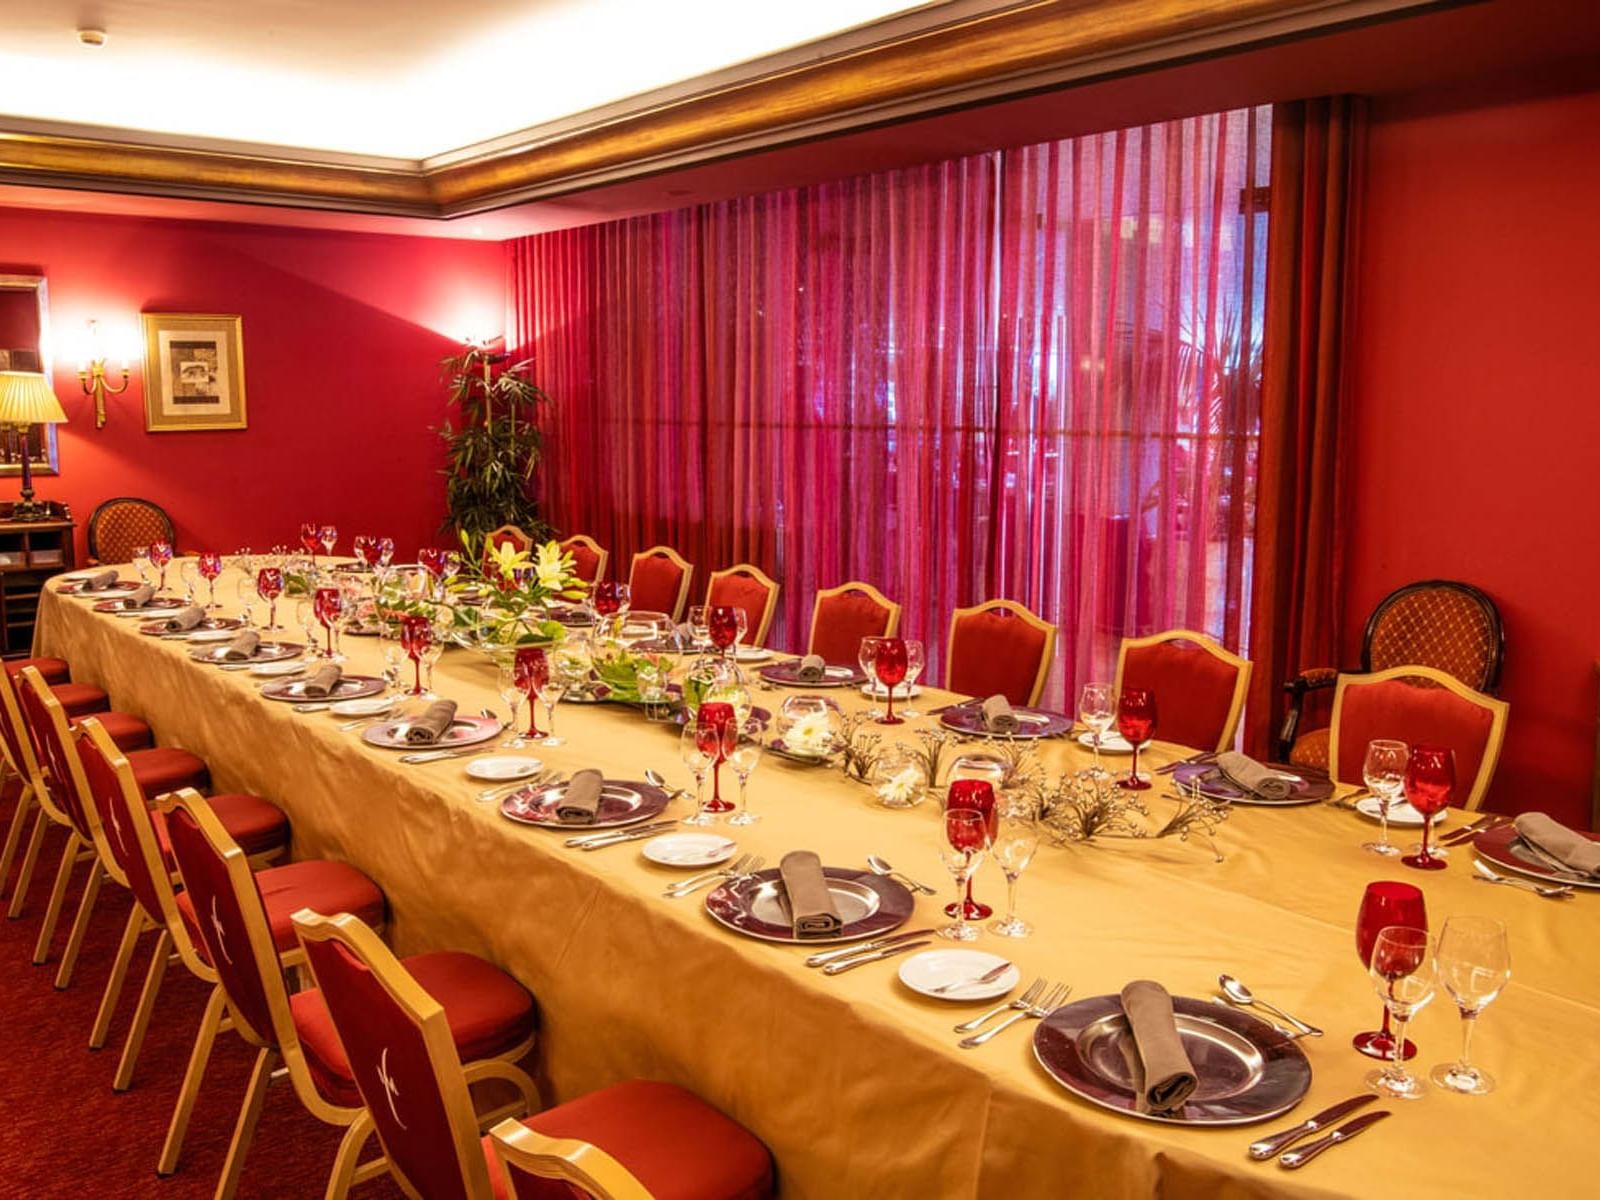 Perfectly arranged Estoril Dining Room at Hotel Cascais Miragem